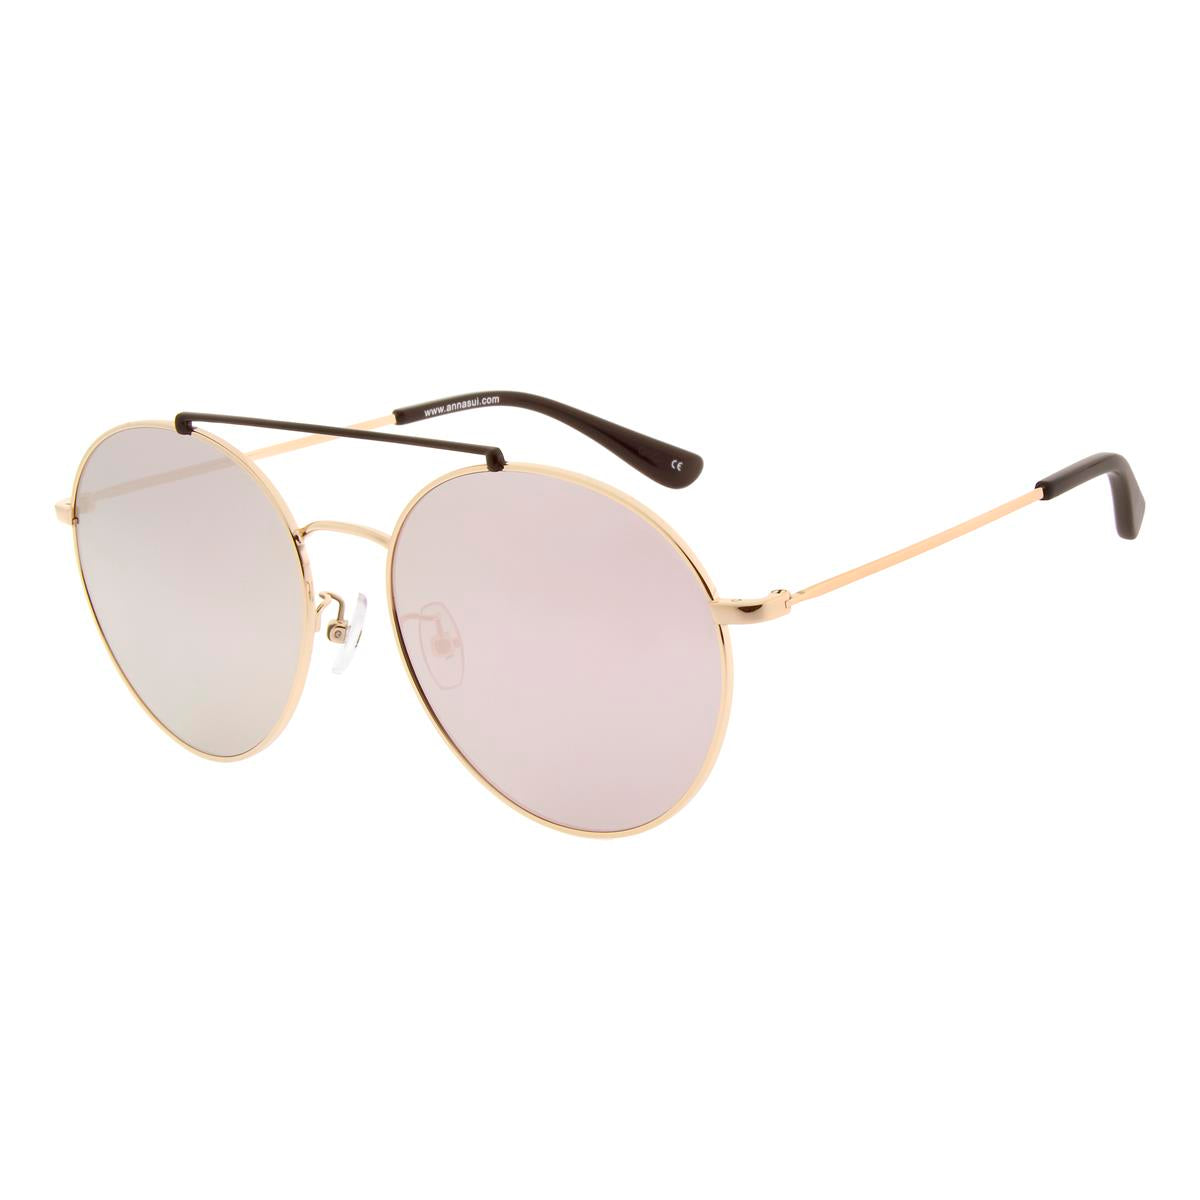 Anna Sui AS1094-1 455 Sunglasses